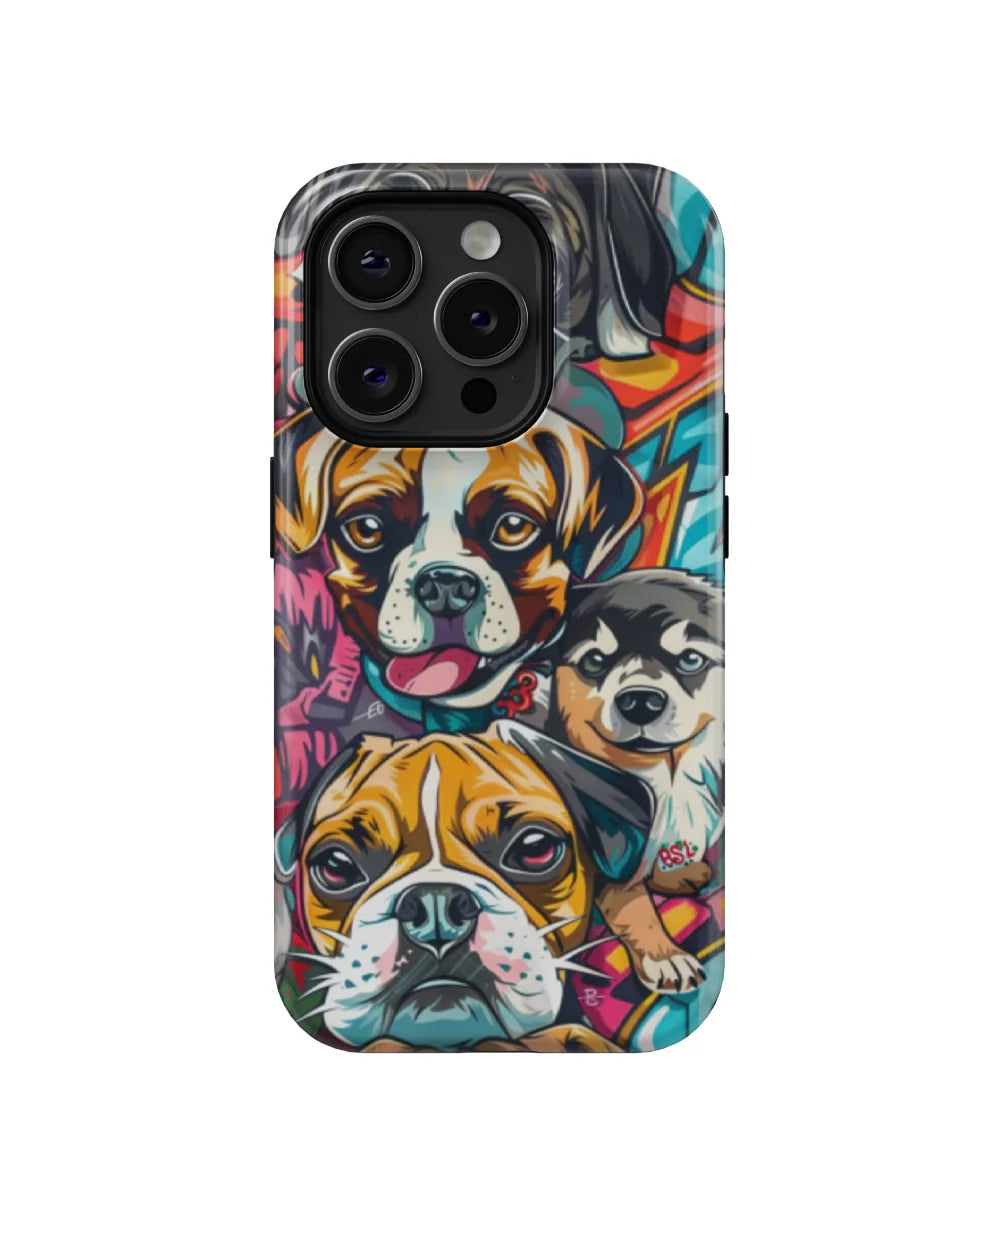 Graffiti Design: Colorful Dog Phone Case